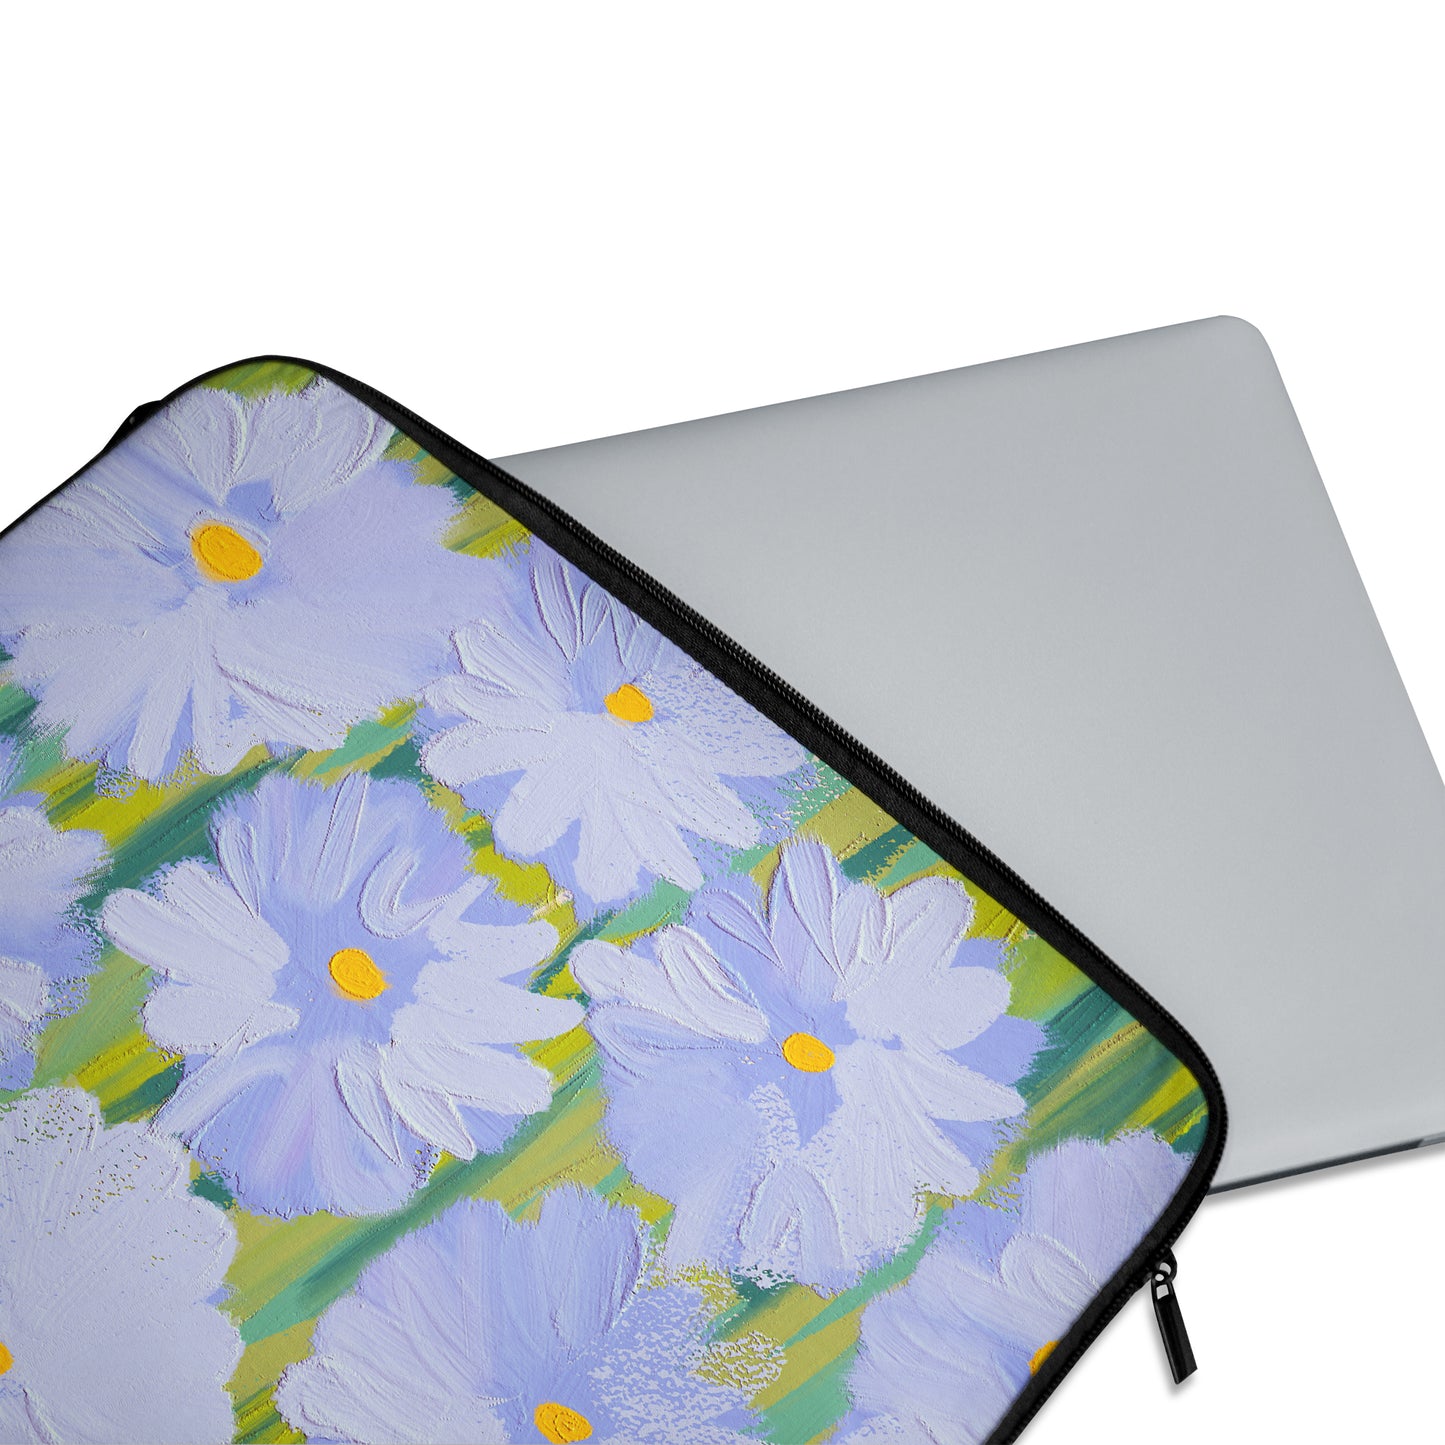 Painted Floral Art - Laptop Sleeve